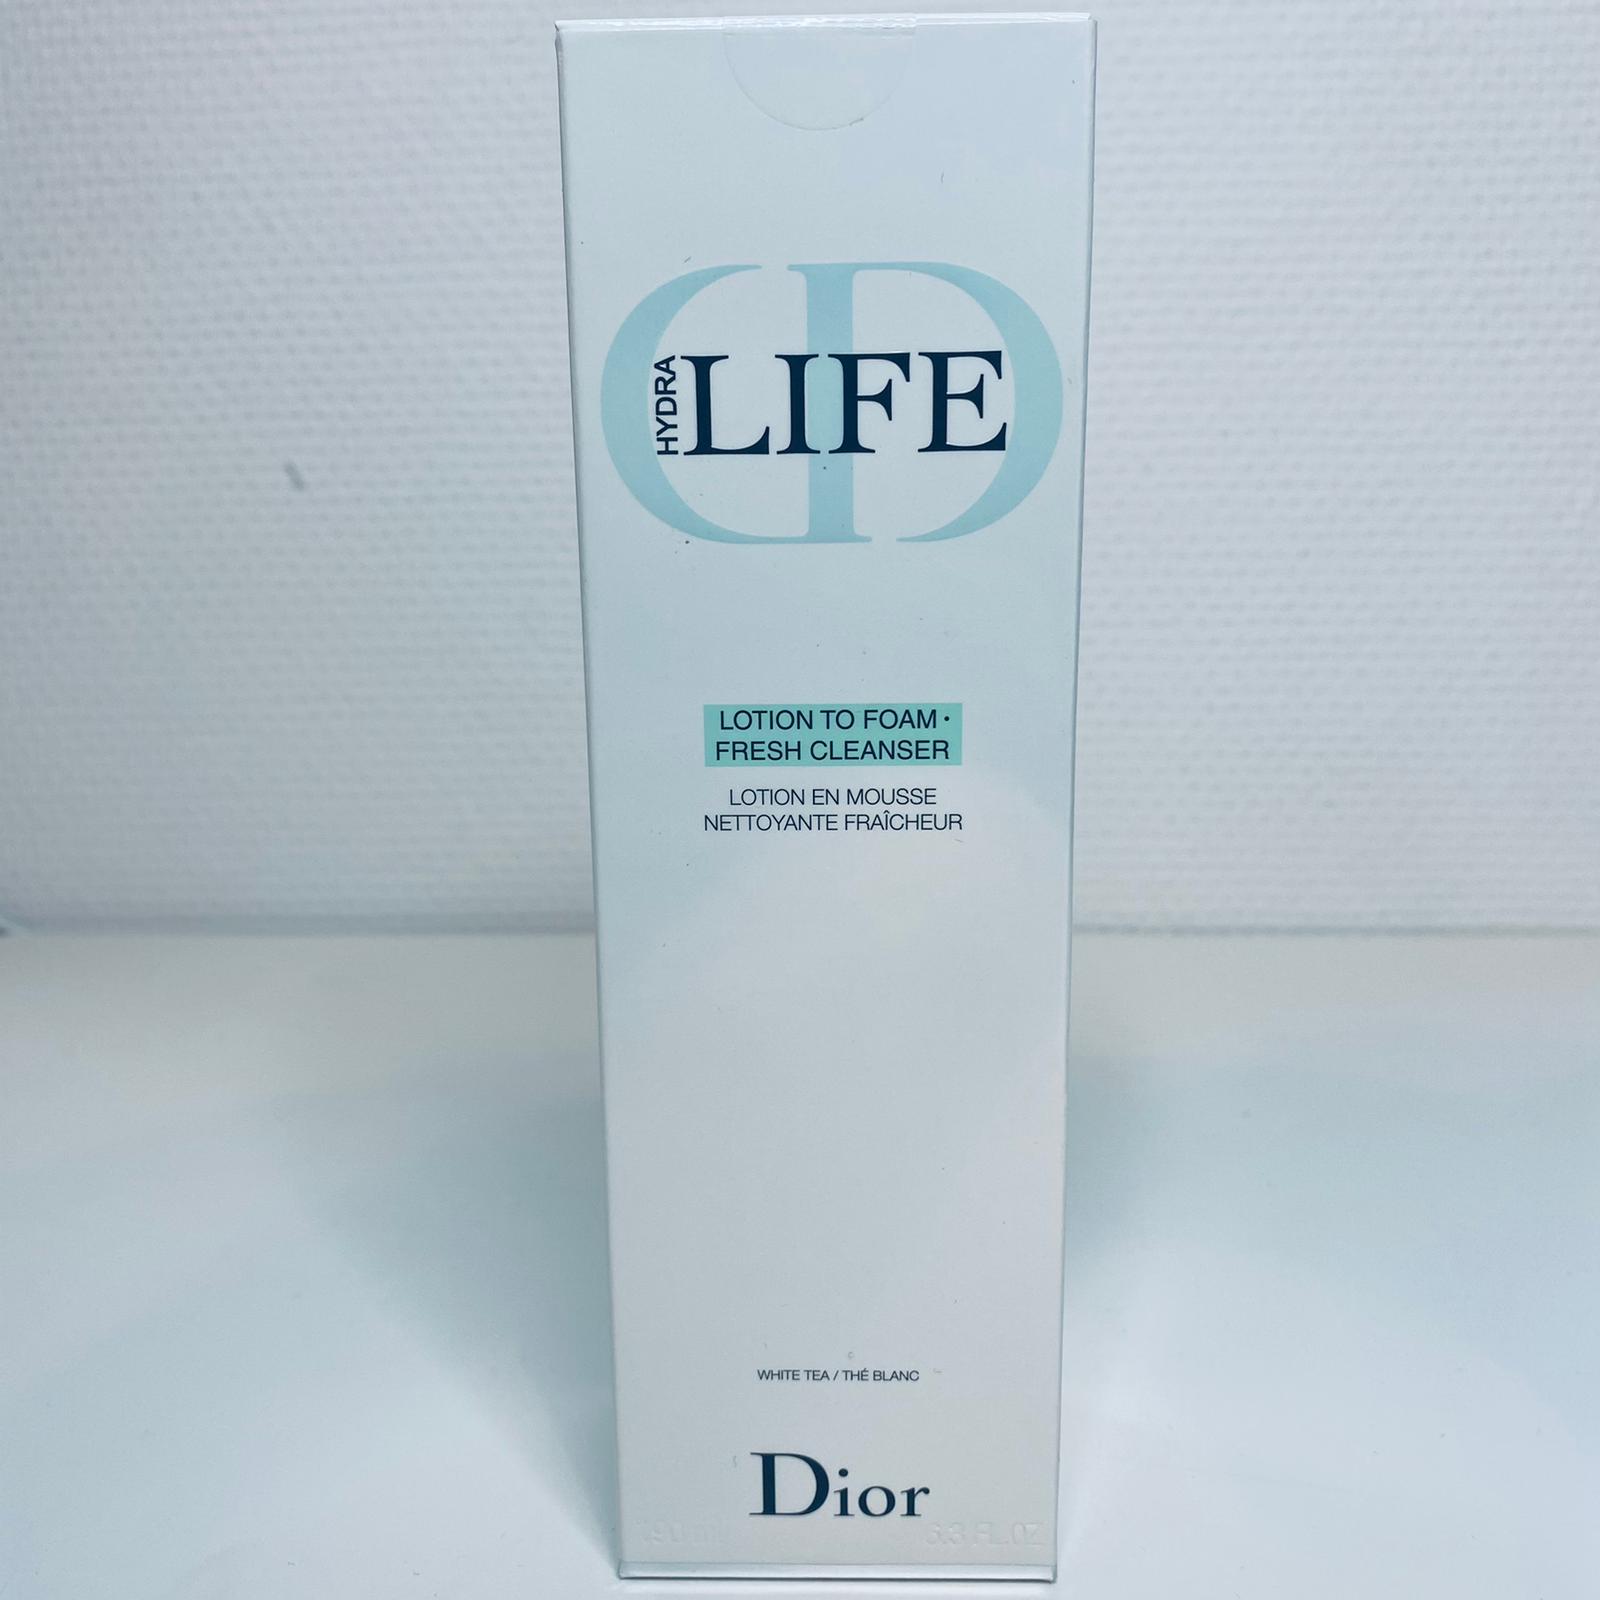 Dior hydra life lotion to foam fresh cleanser